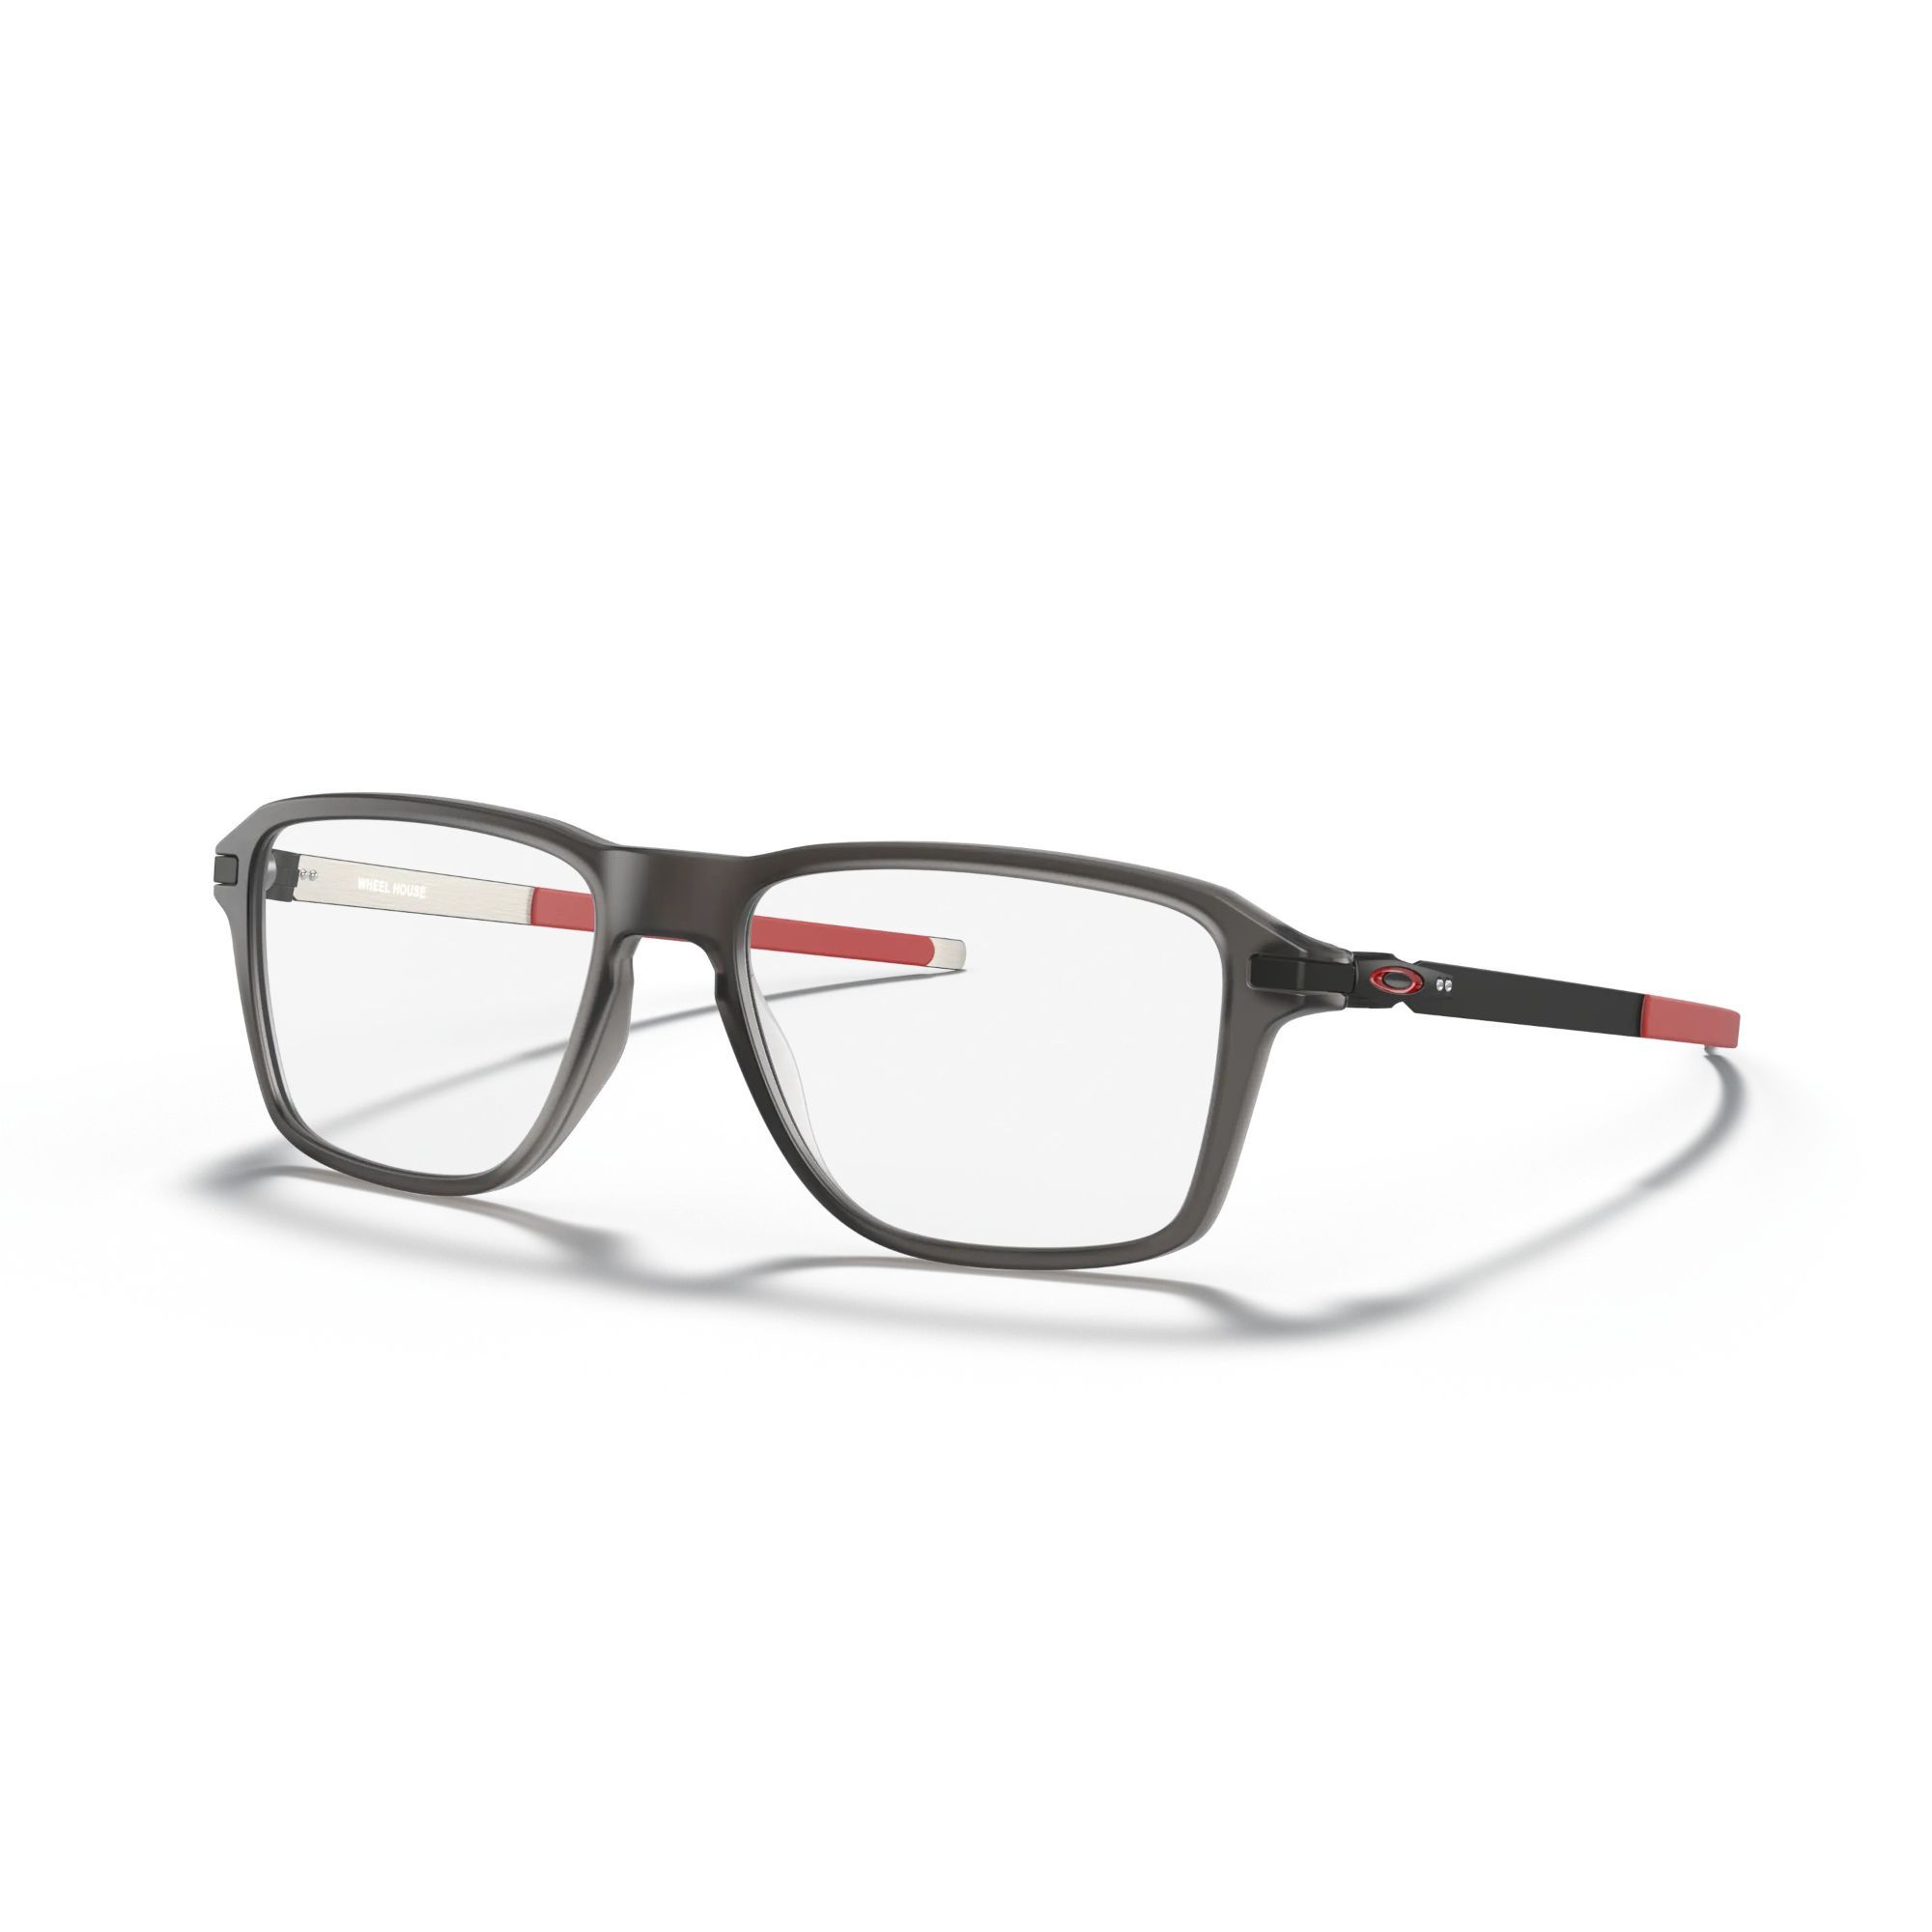 0OX8166 Square Eyeglasses 816603 - size 54